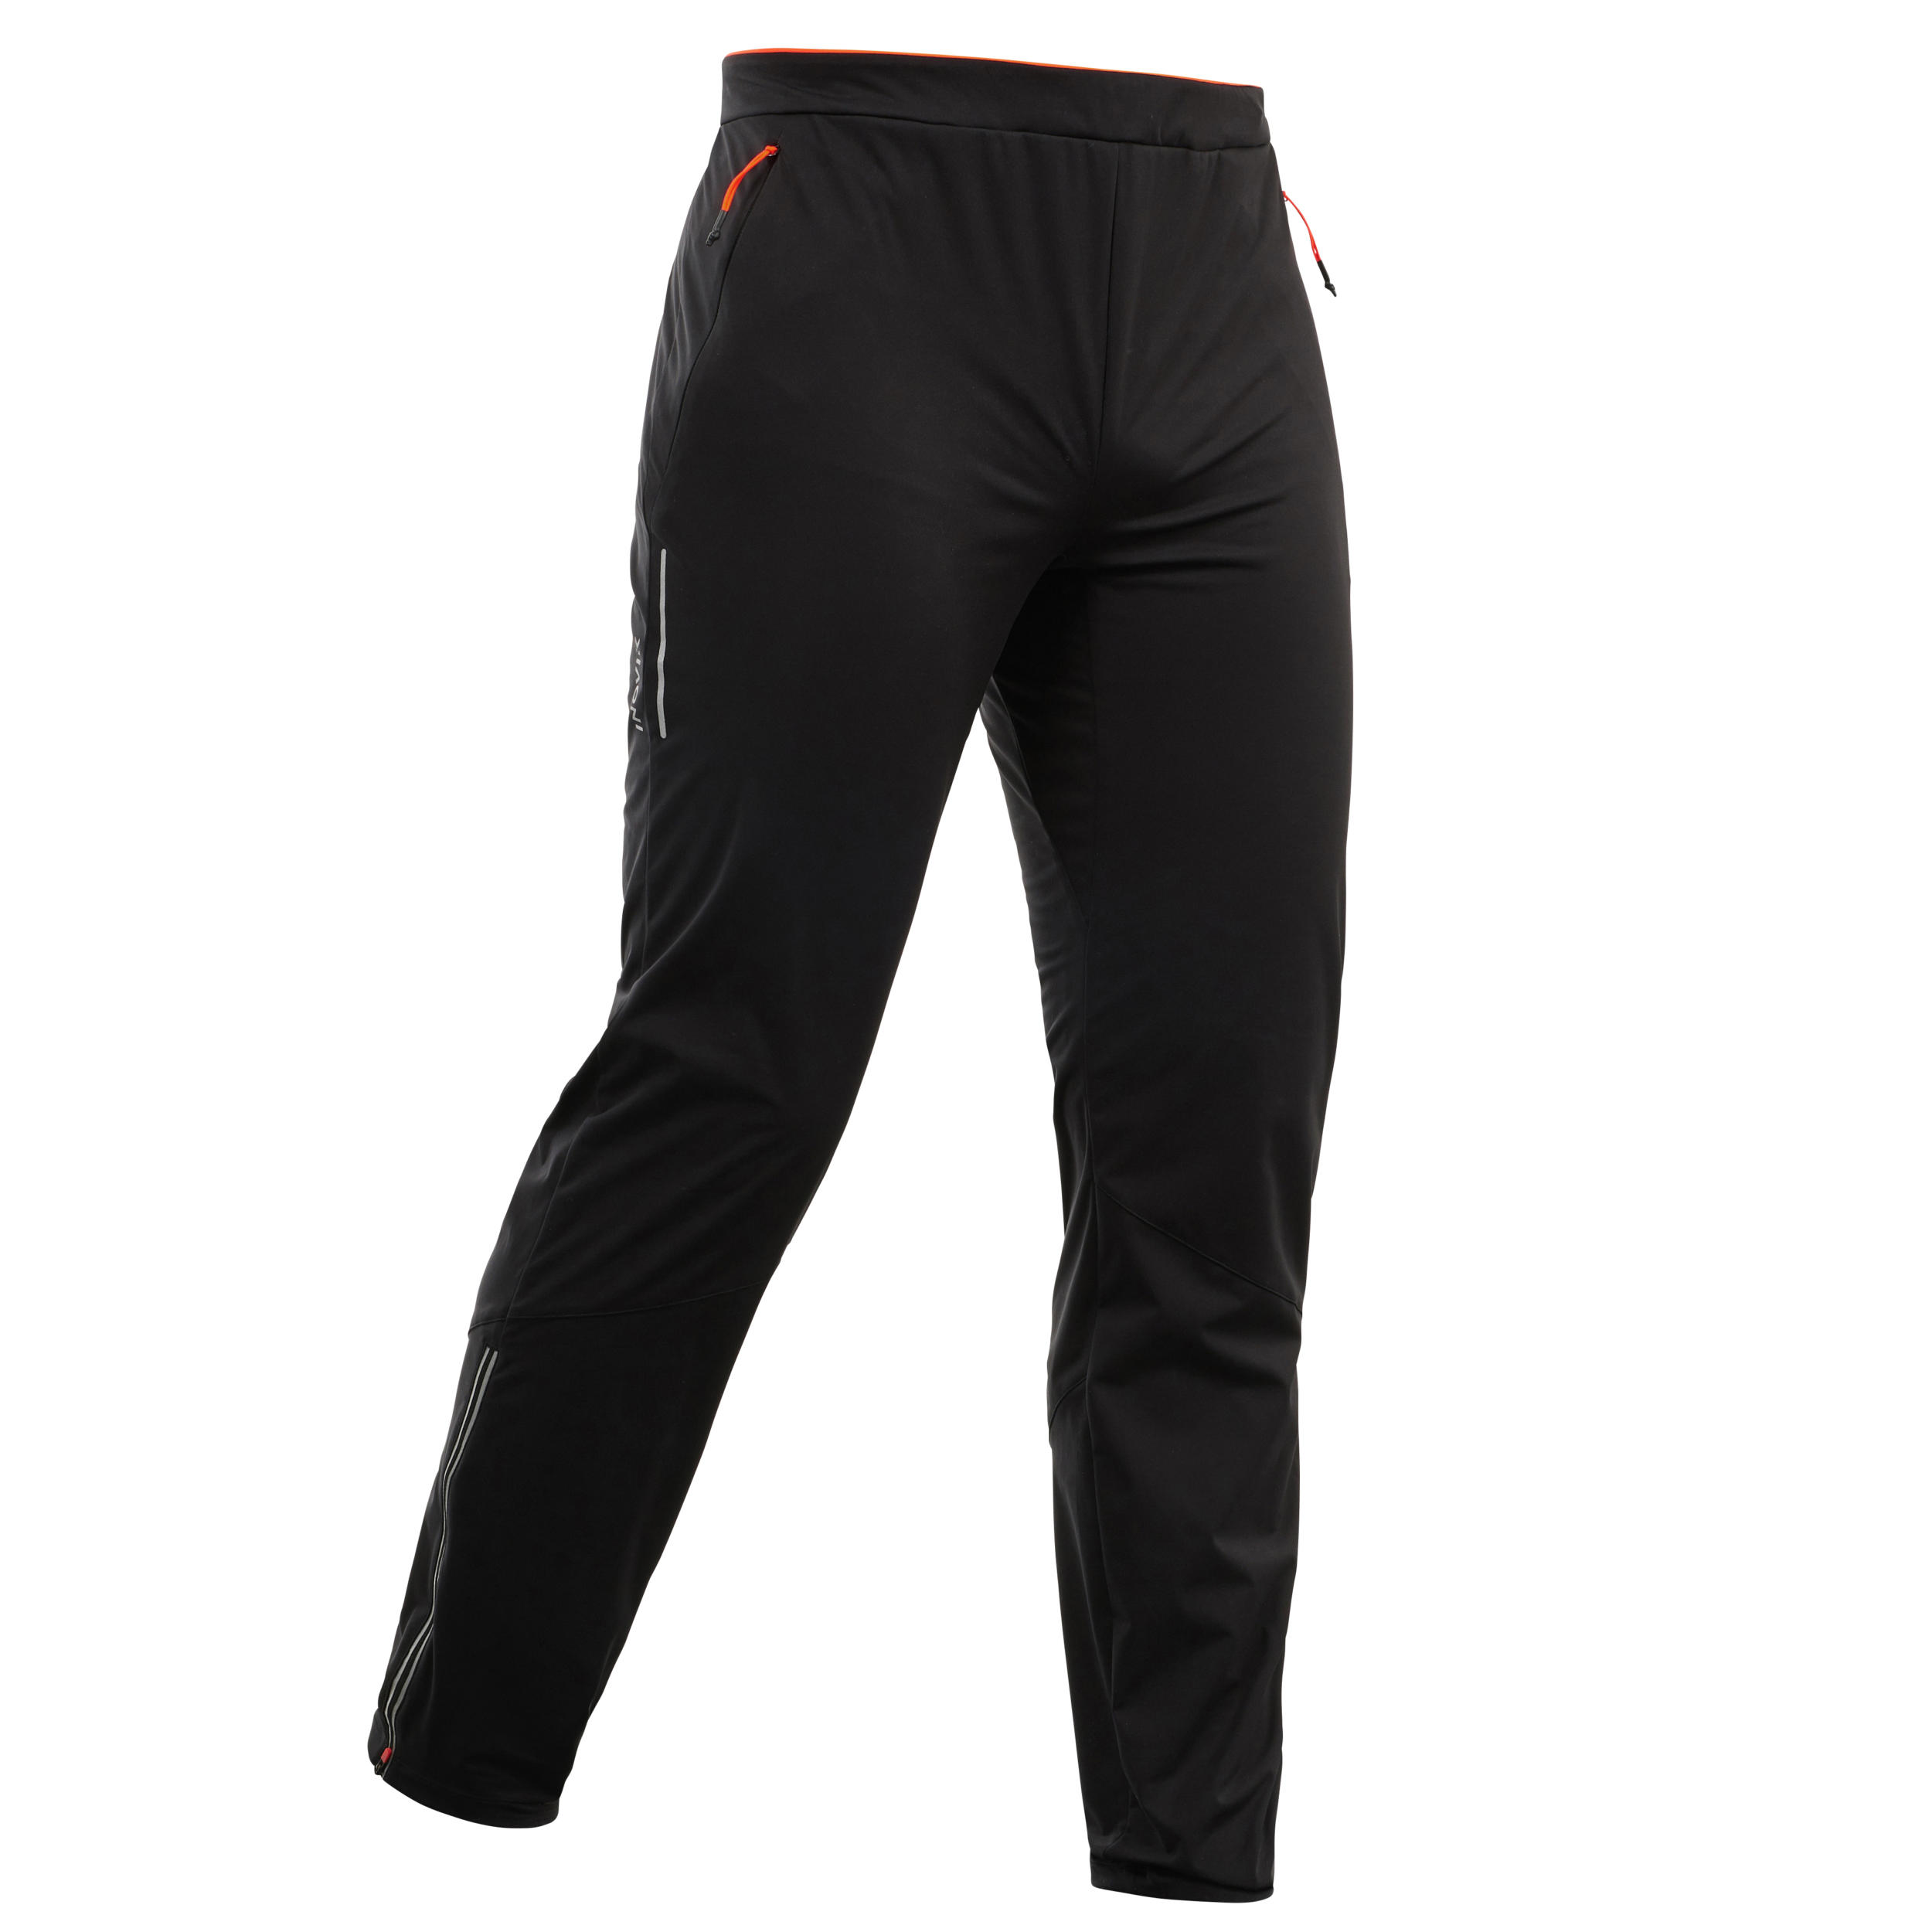 Men's Cross-Country Ski Trousers XC S Pant 500 - Black INOVIK - Decathlon